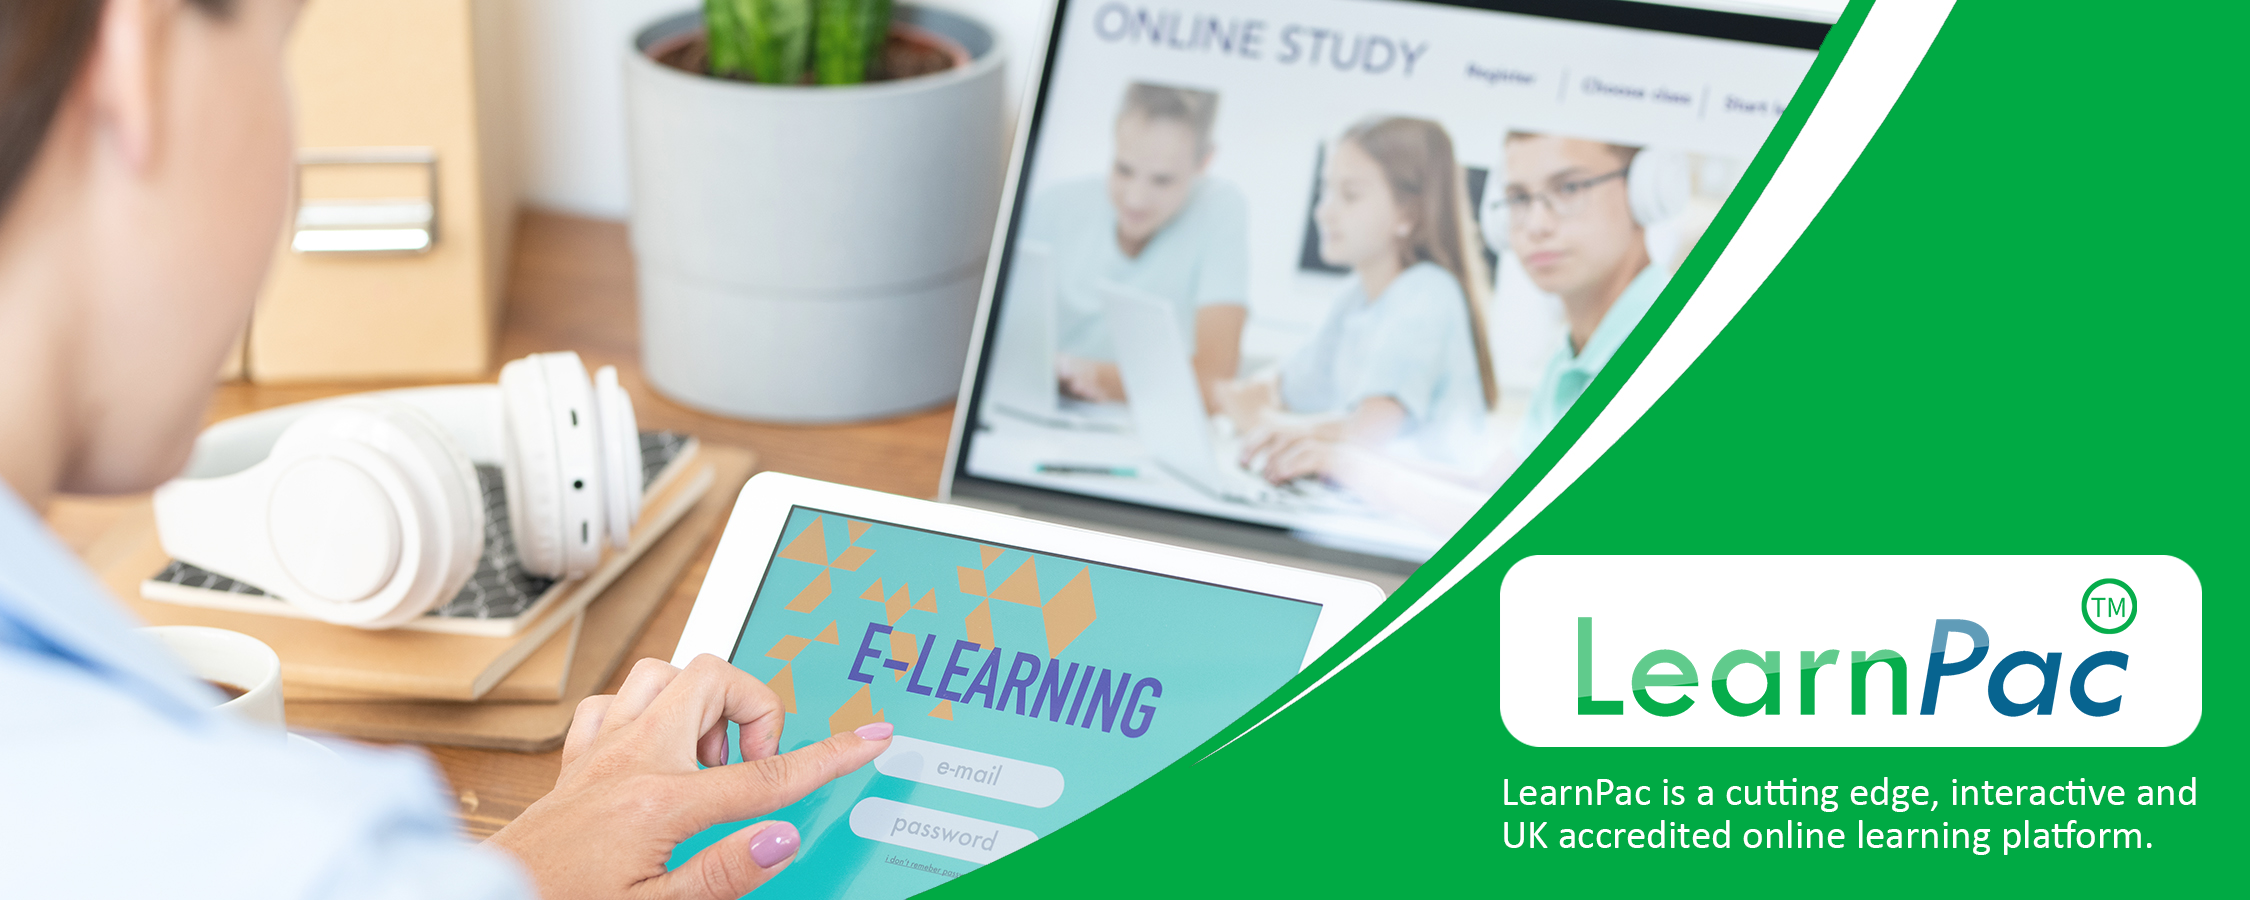 Facilitation Skills Training - Online Learning Courses - E-Learning Courses - LearnPac Systems UK -